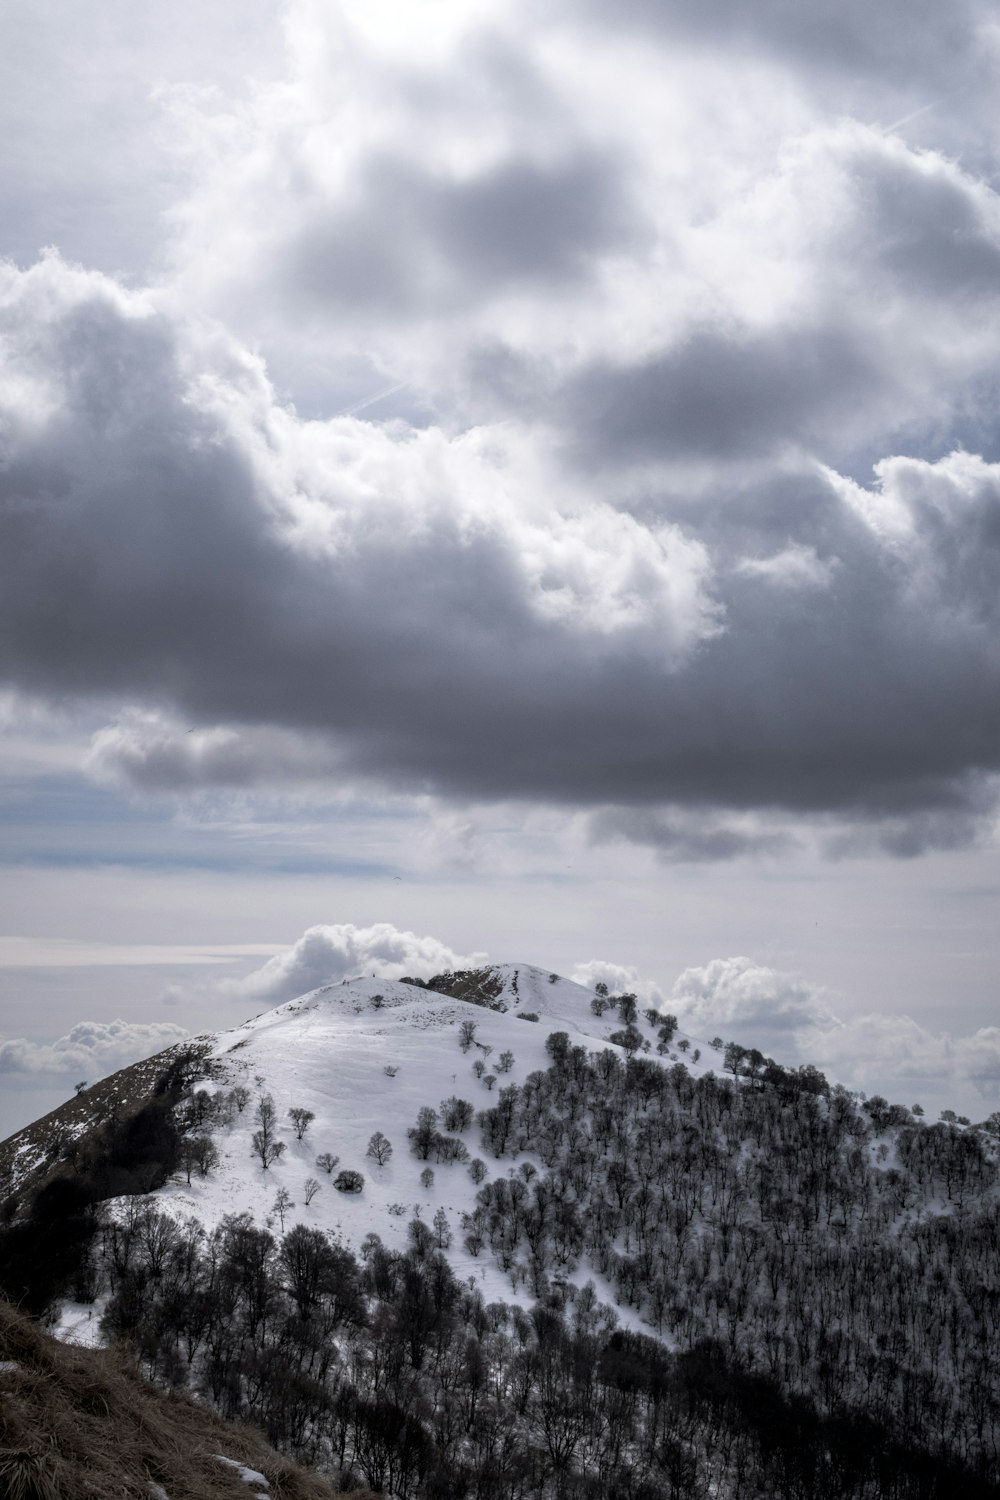 snow caps mountain under white cloud